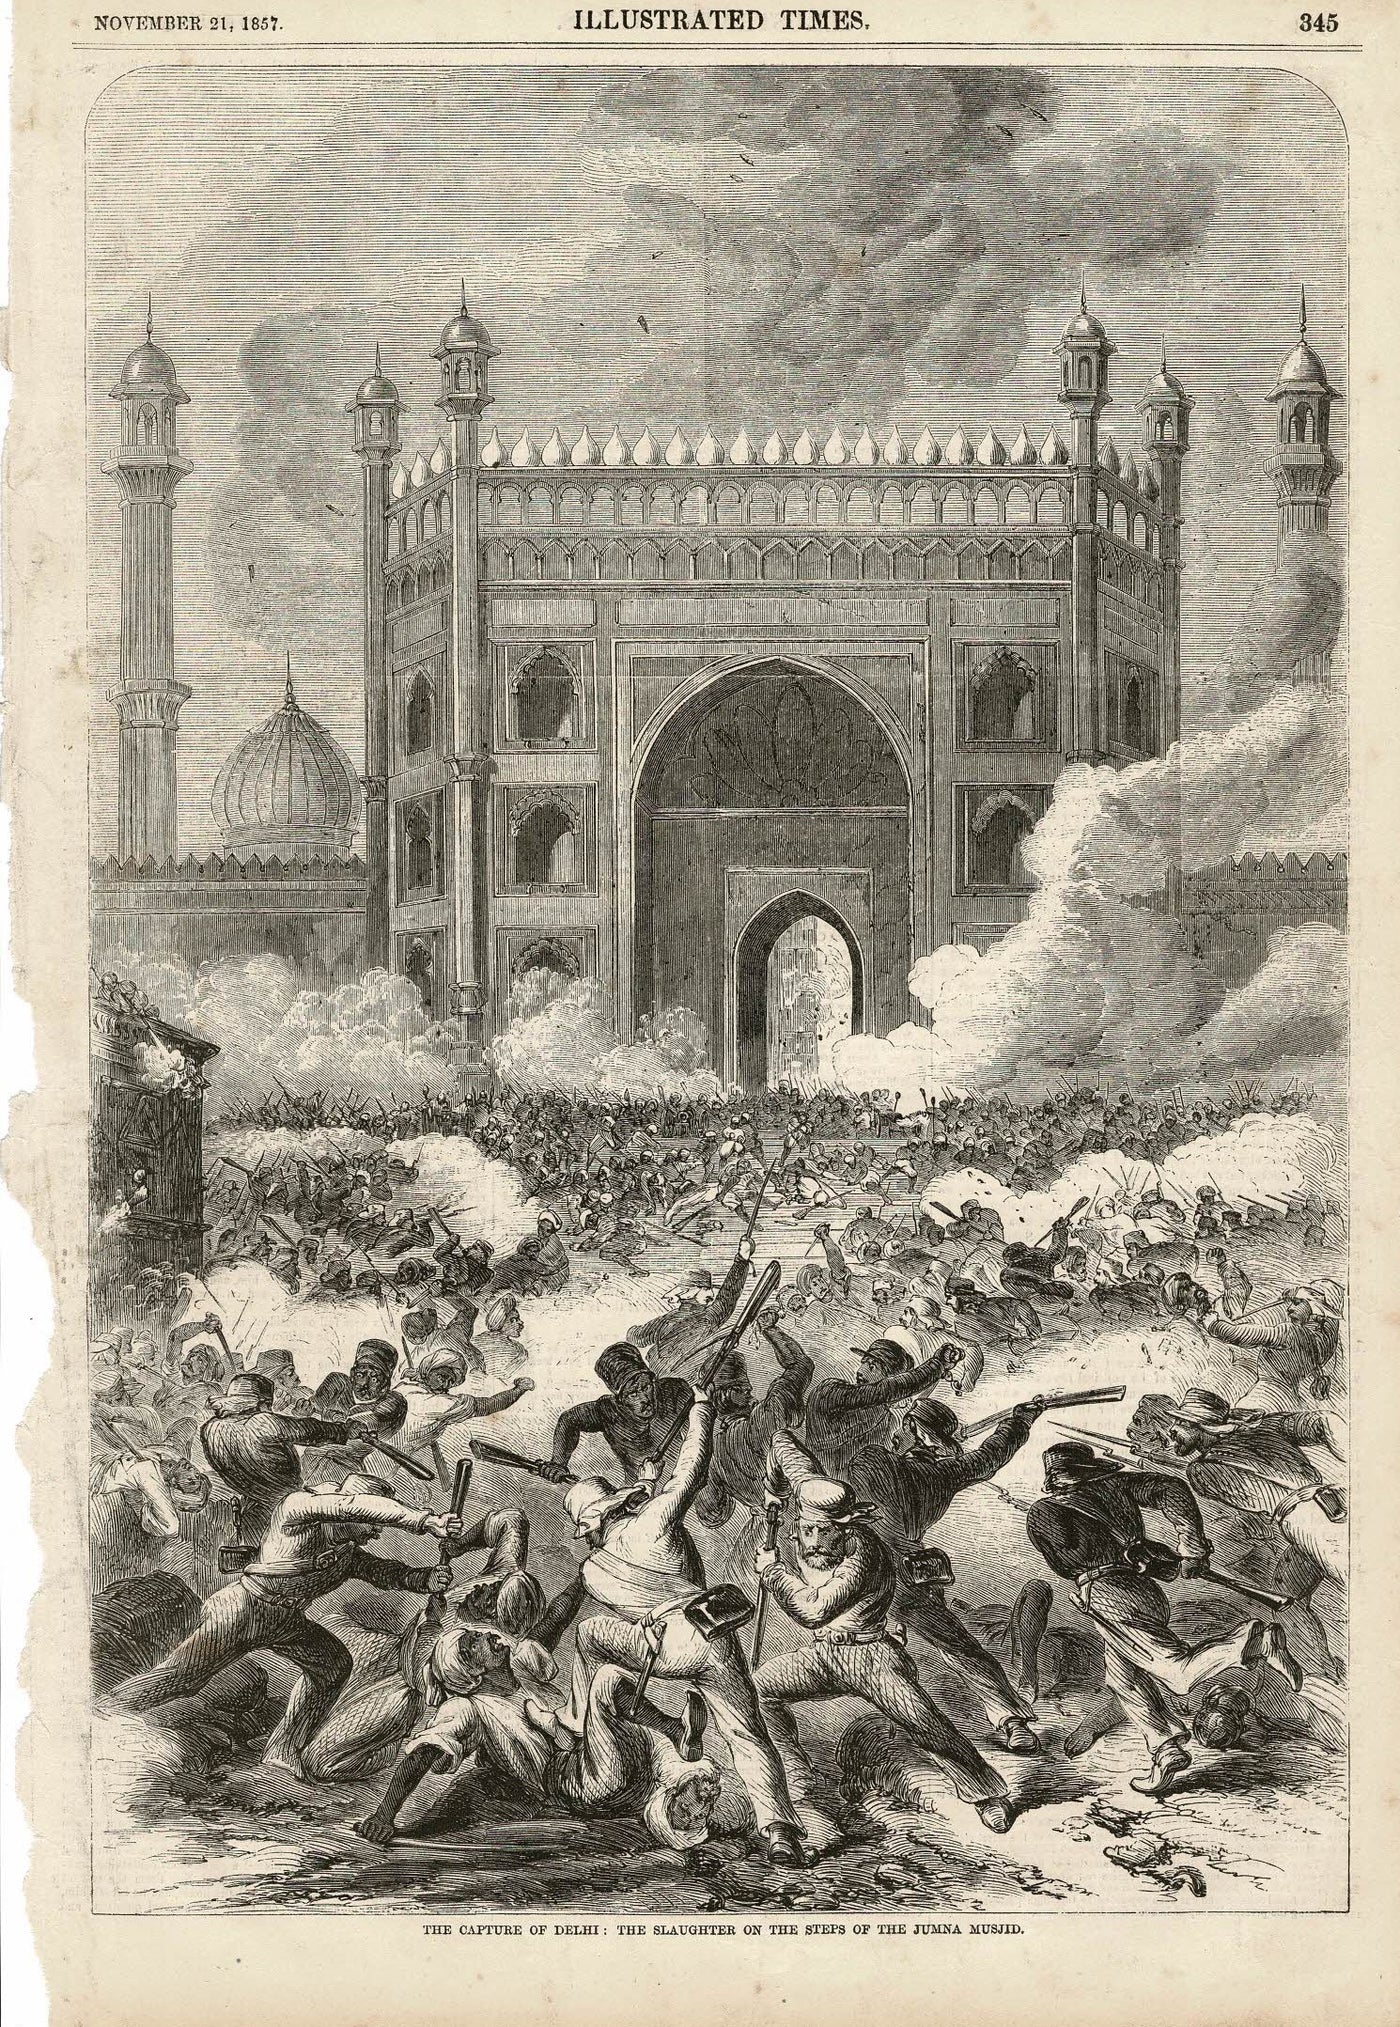 Indian Mutiny. Antique print of the Capture of Delhi